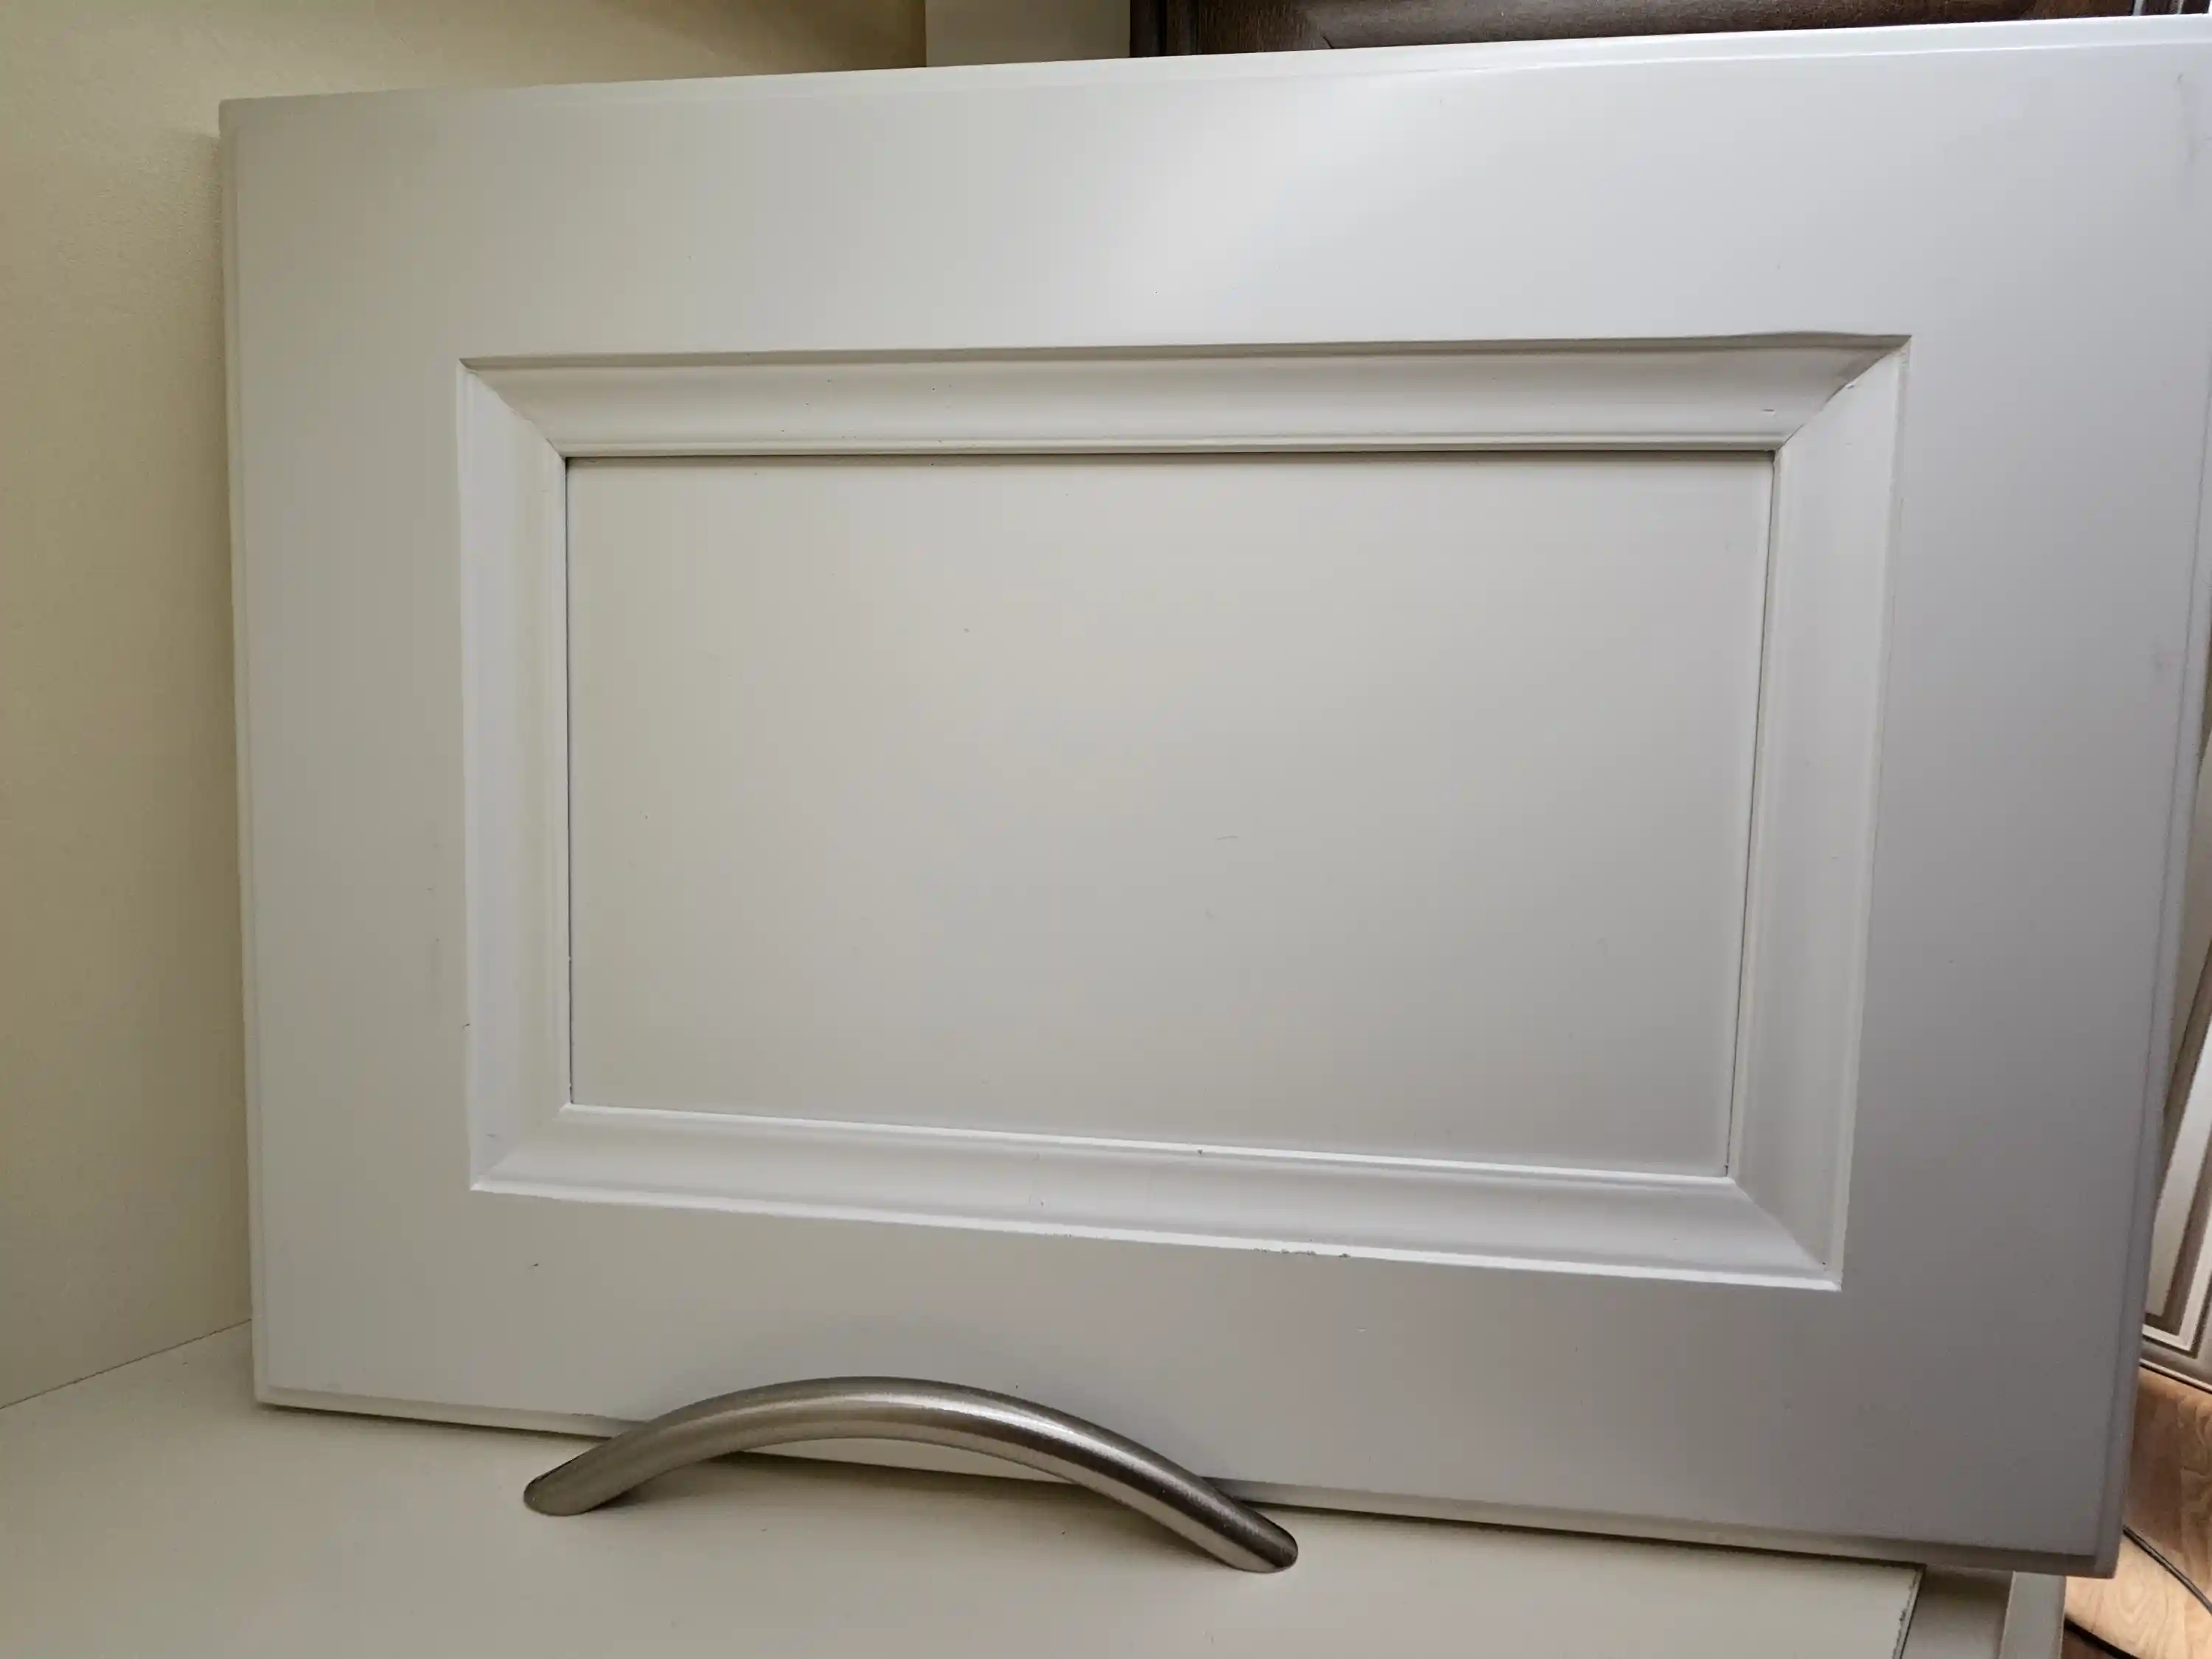 Plain white kitchen or bathroom cabinet